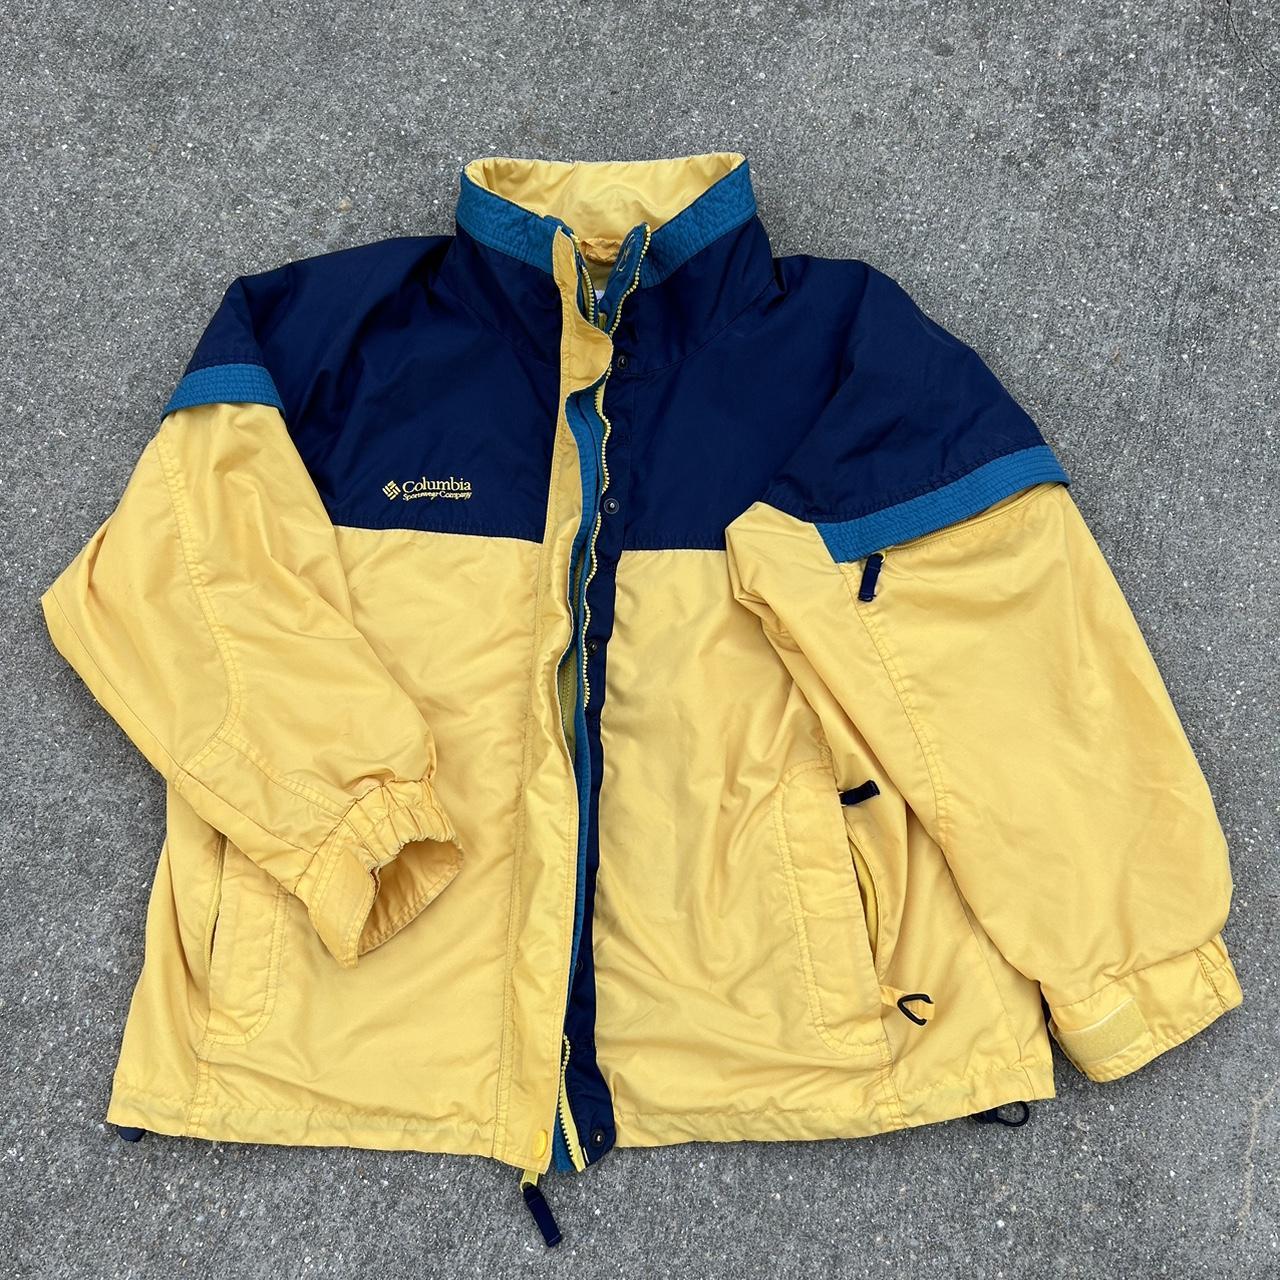 Columbia Sportswear Women's Yellow and Navy Jacket | Depop